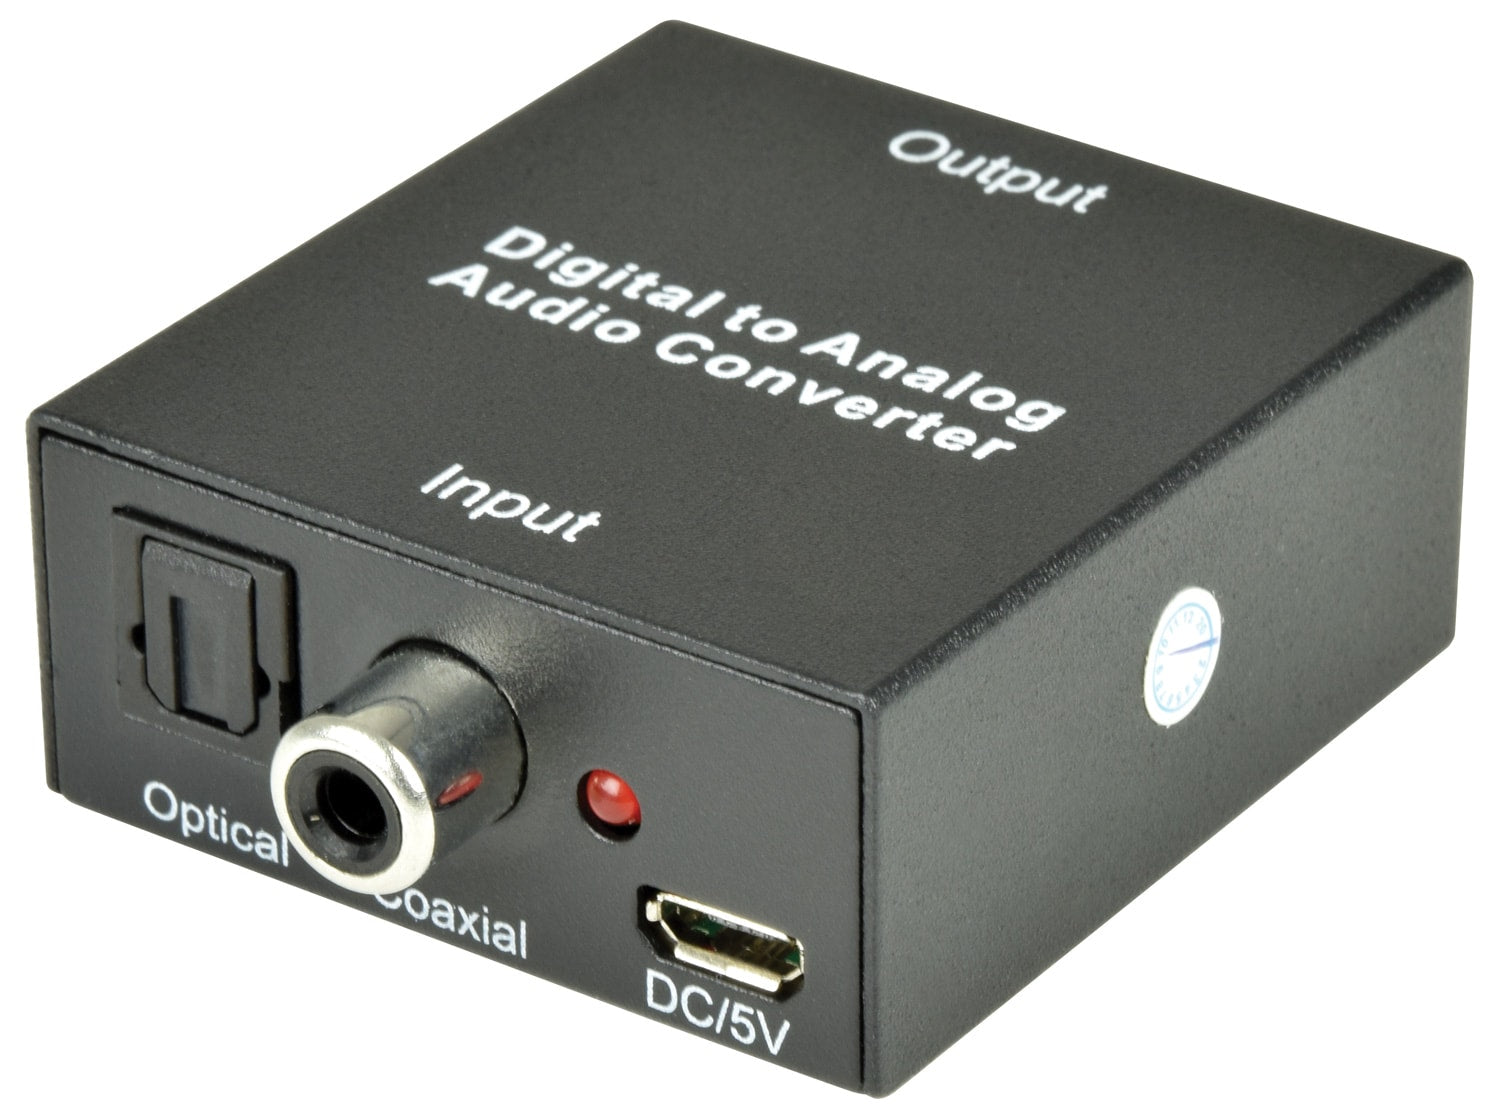 AV Link Digital Audio to Analogue Audio Converter